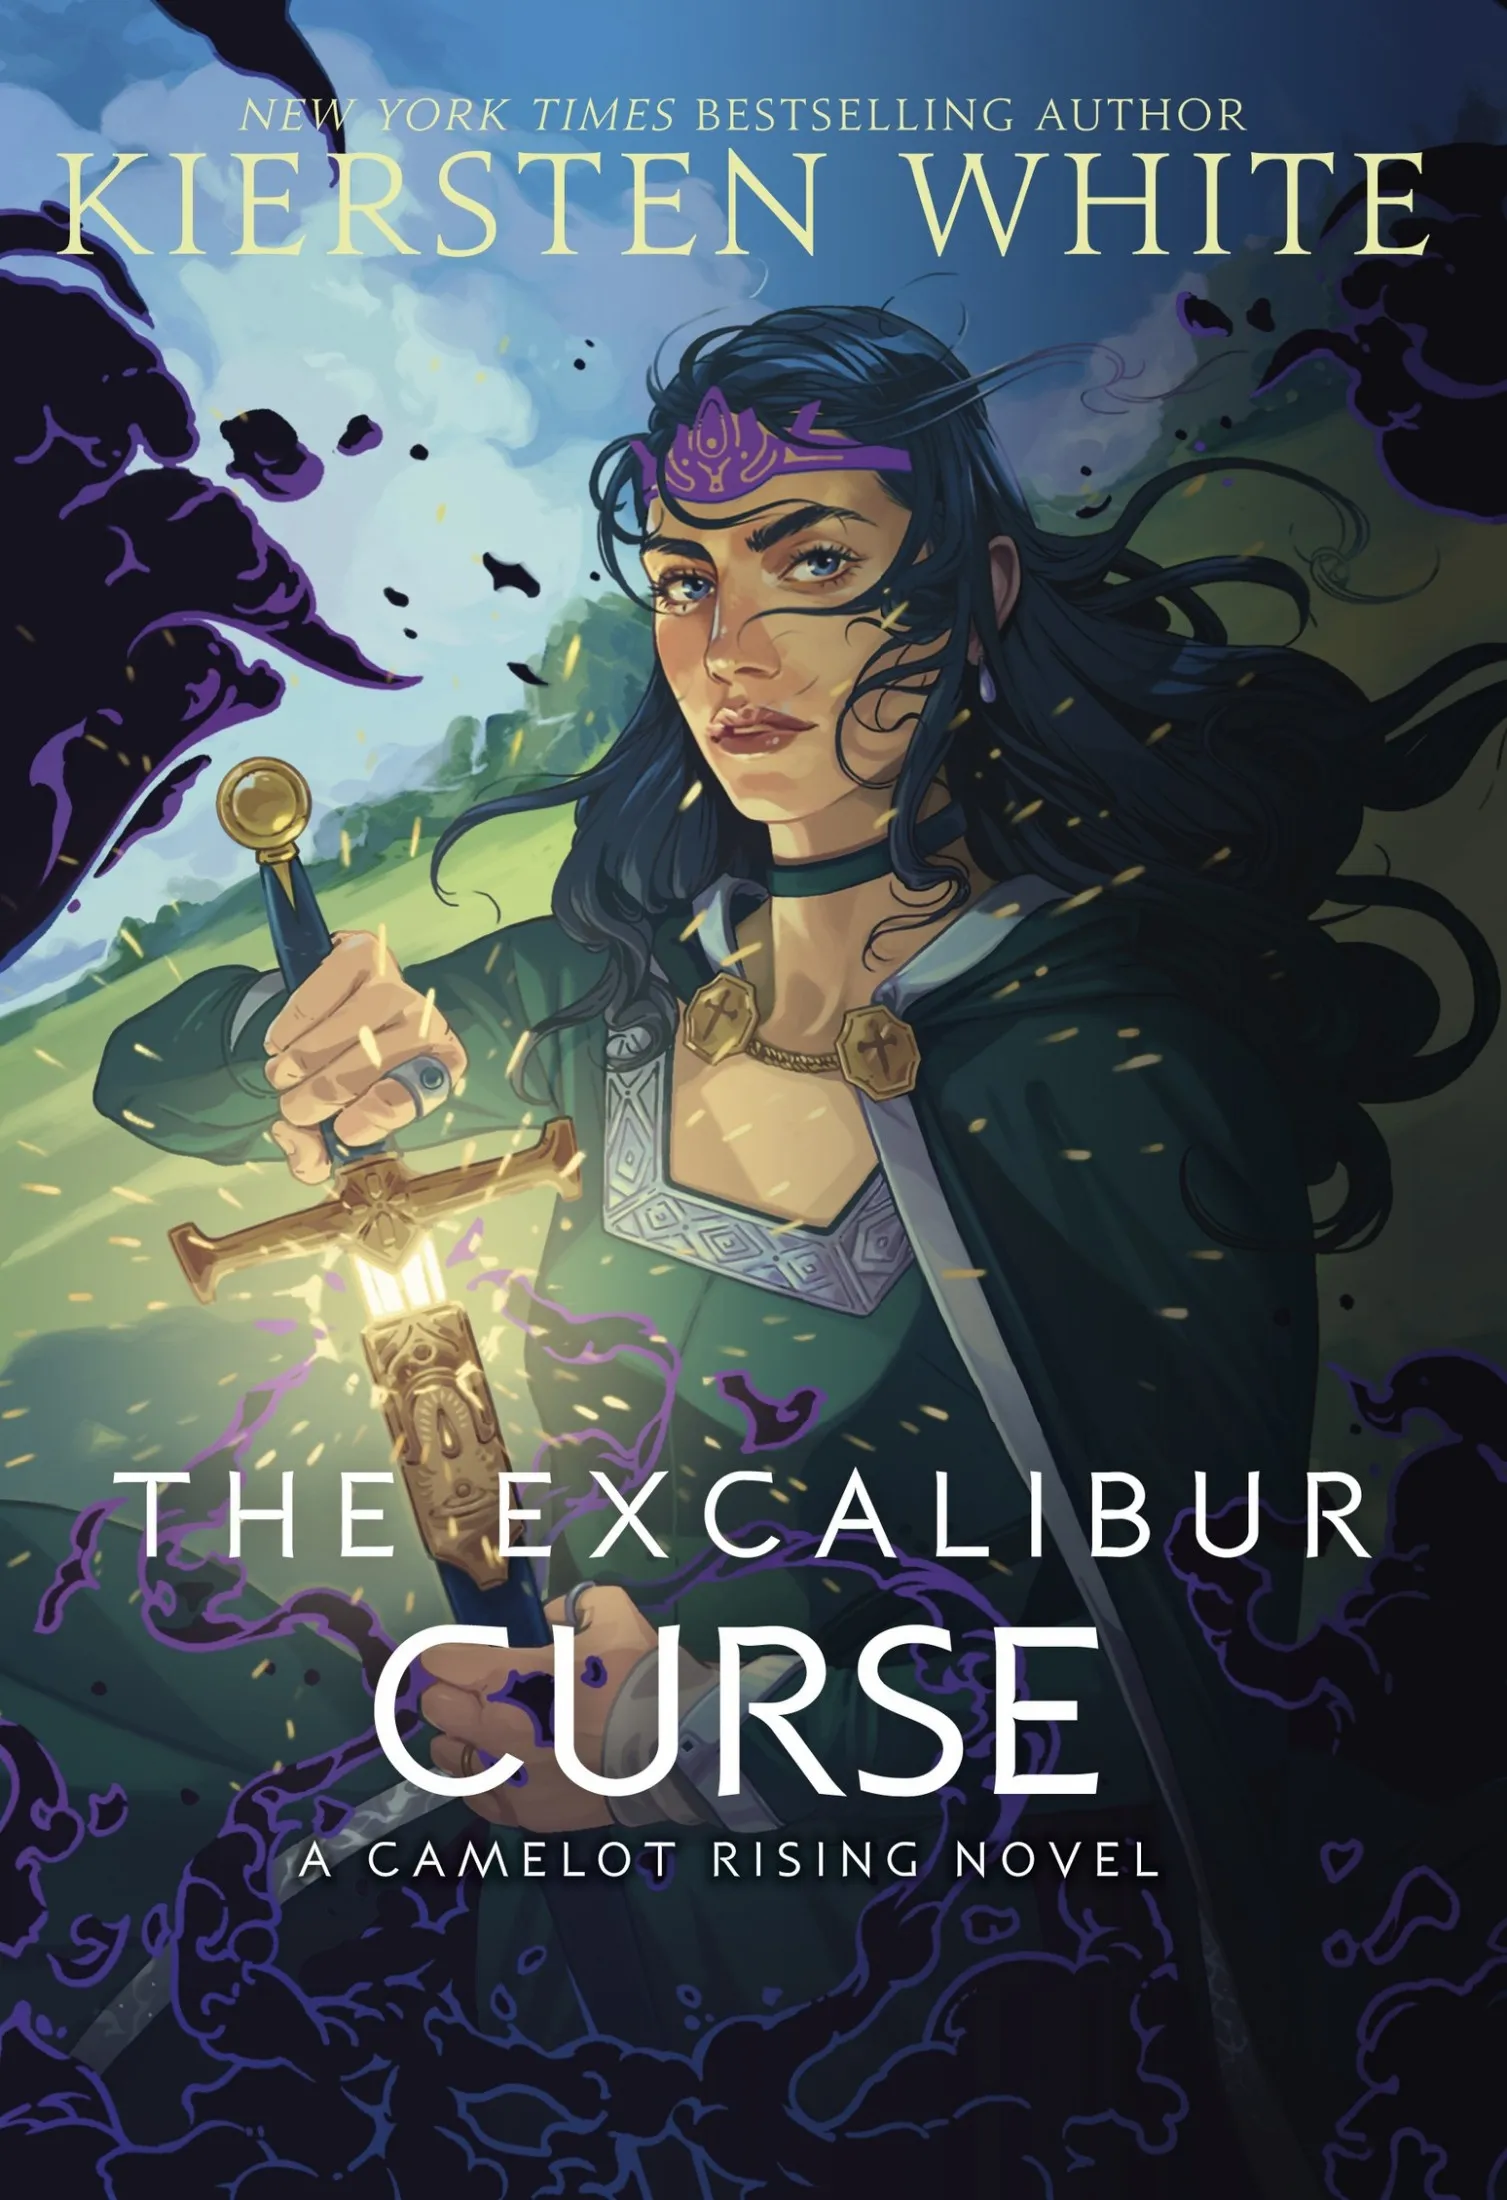 The Excalibur Curse (Camelot Rising Trilogy #3)